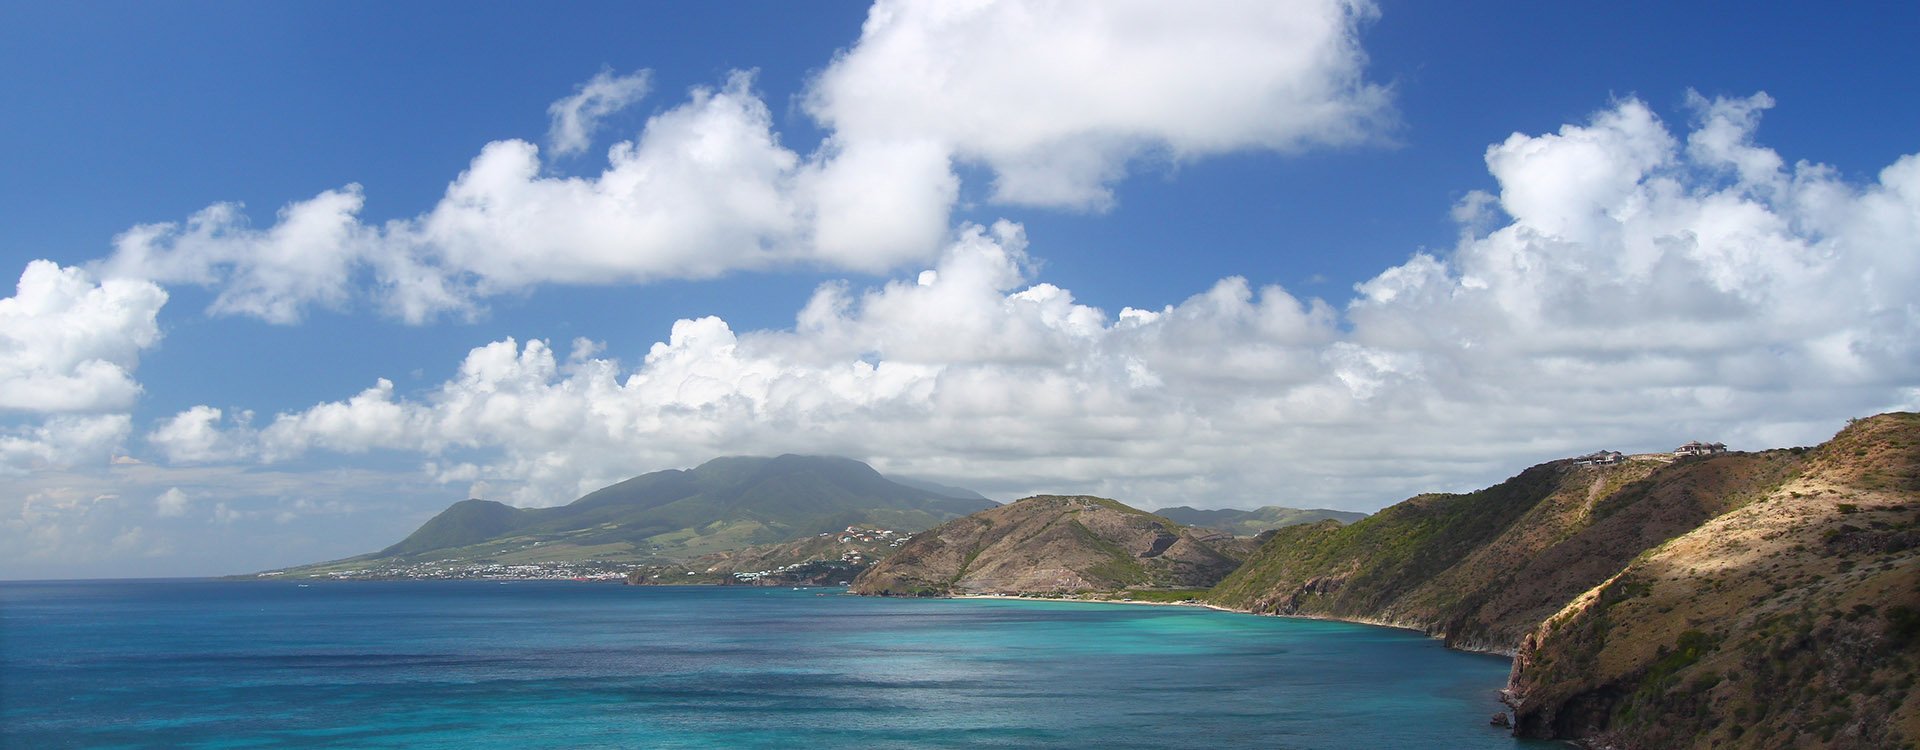 Spectacular coastline on the Caribbean island of Saint Kitts